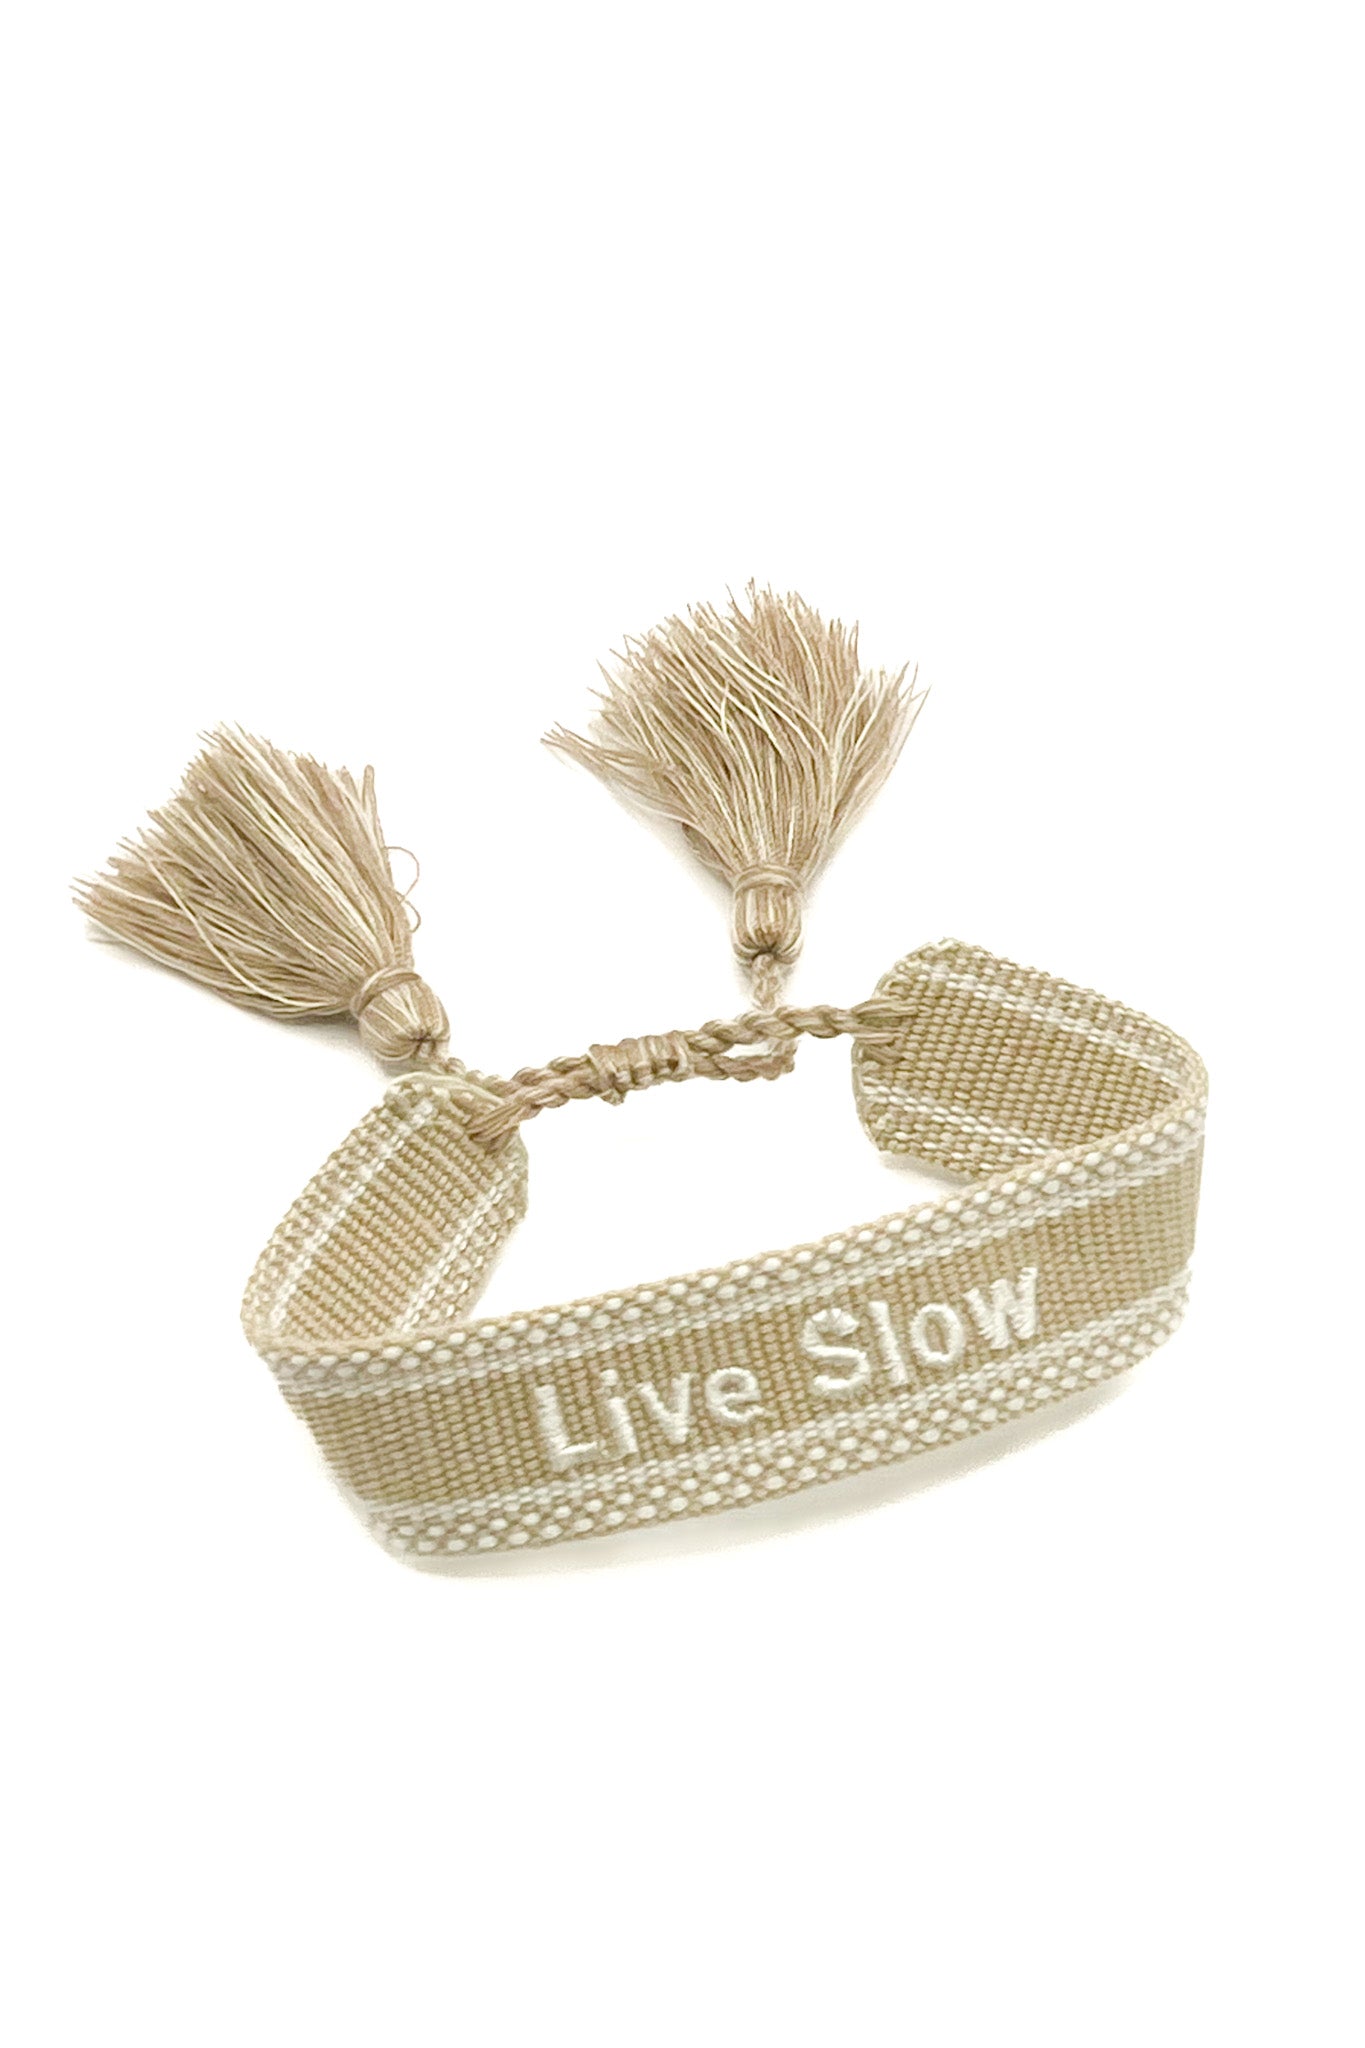 Special Message Tassel Bracelet